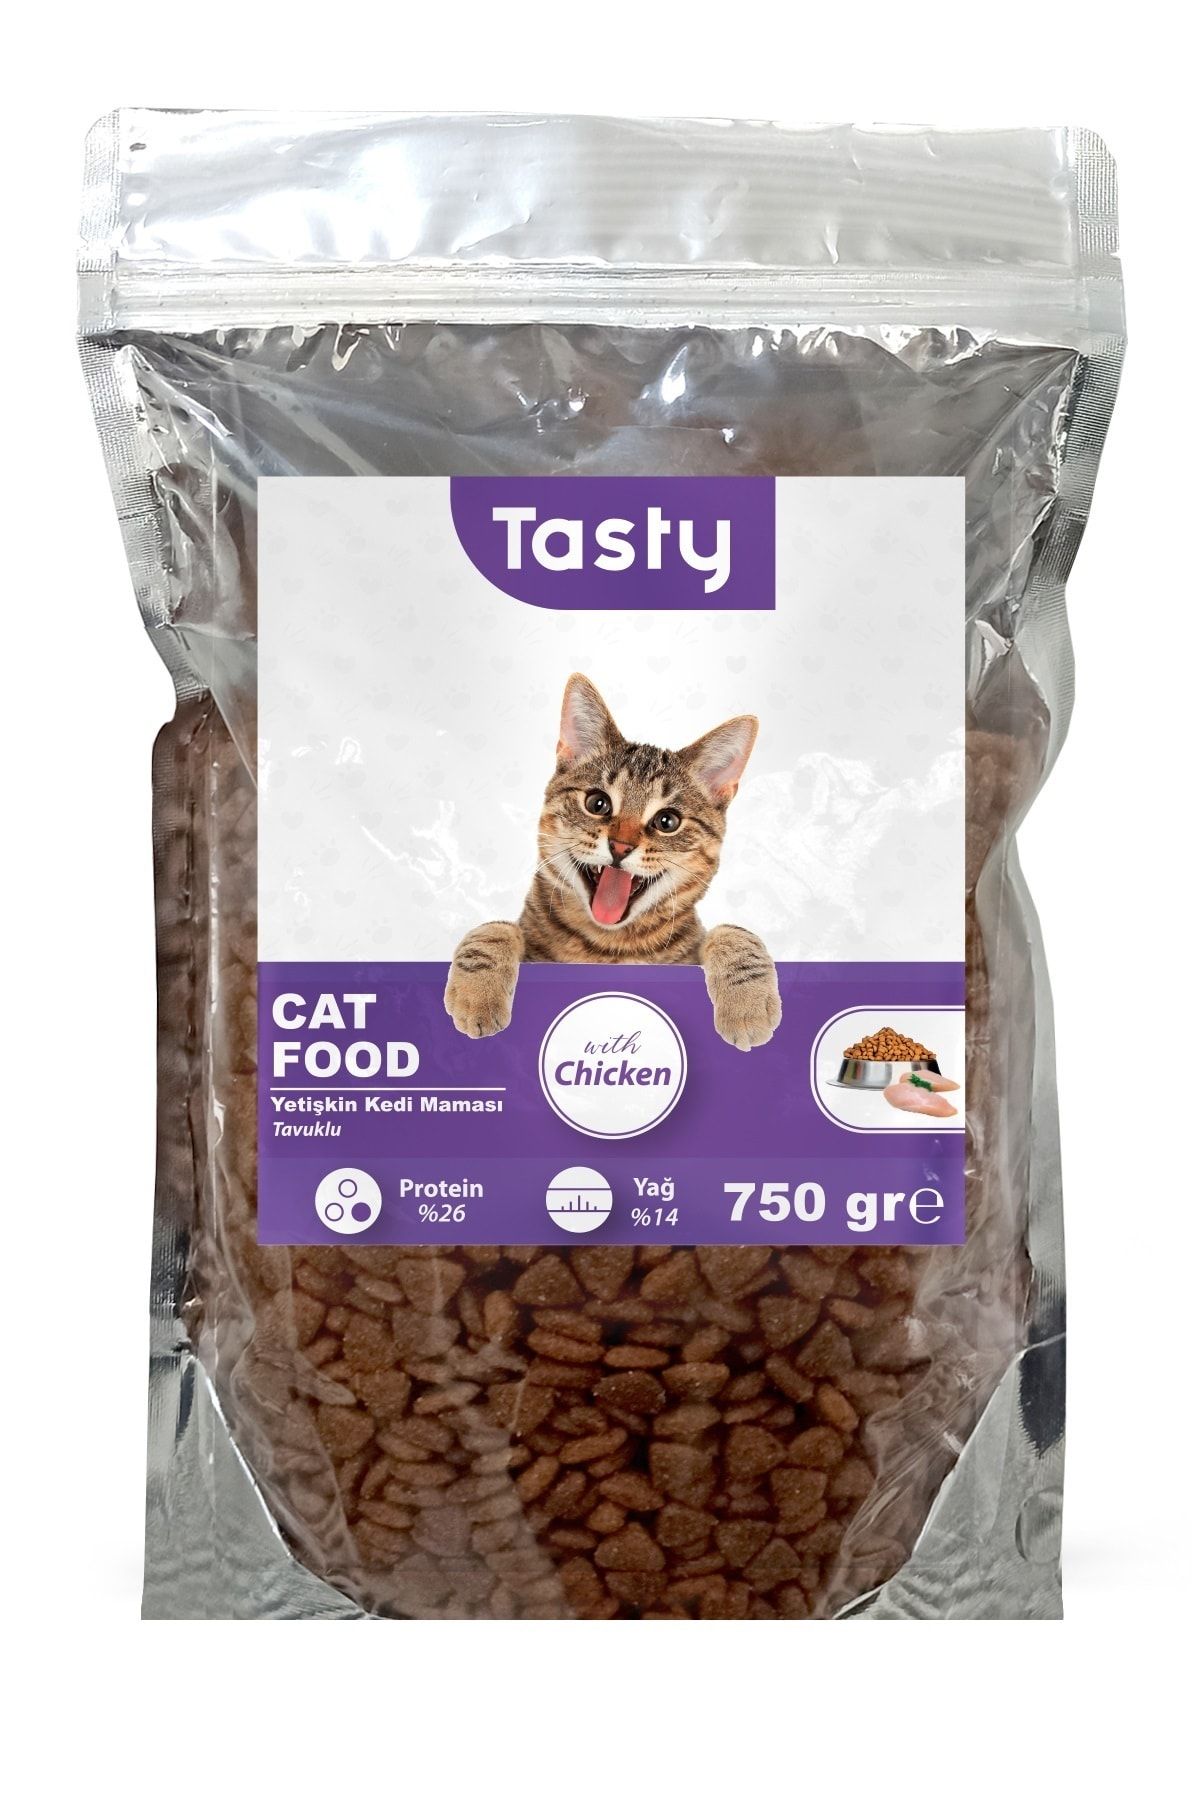 Tasty Tavuklu Yetişkin Kedi Maması 750 gr Fiyatı, Yorumları TRENDYOL